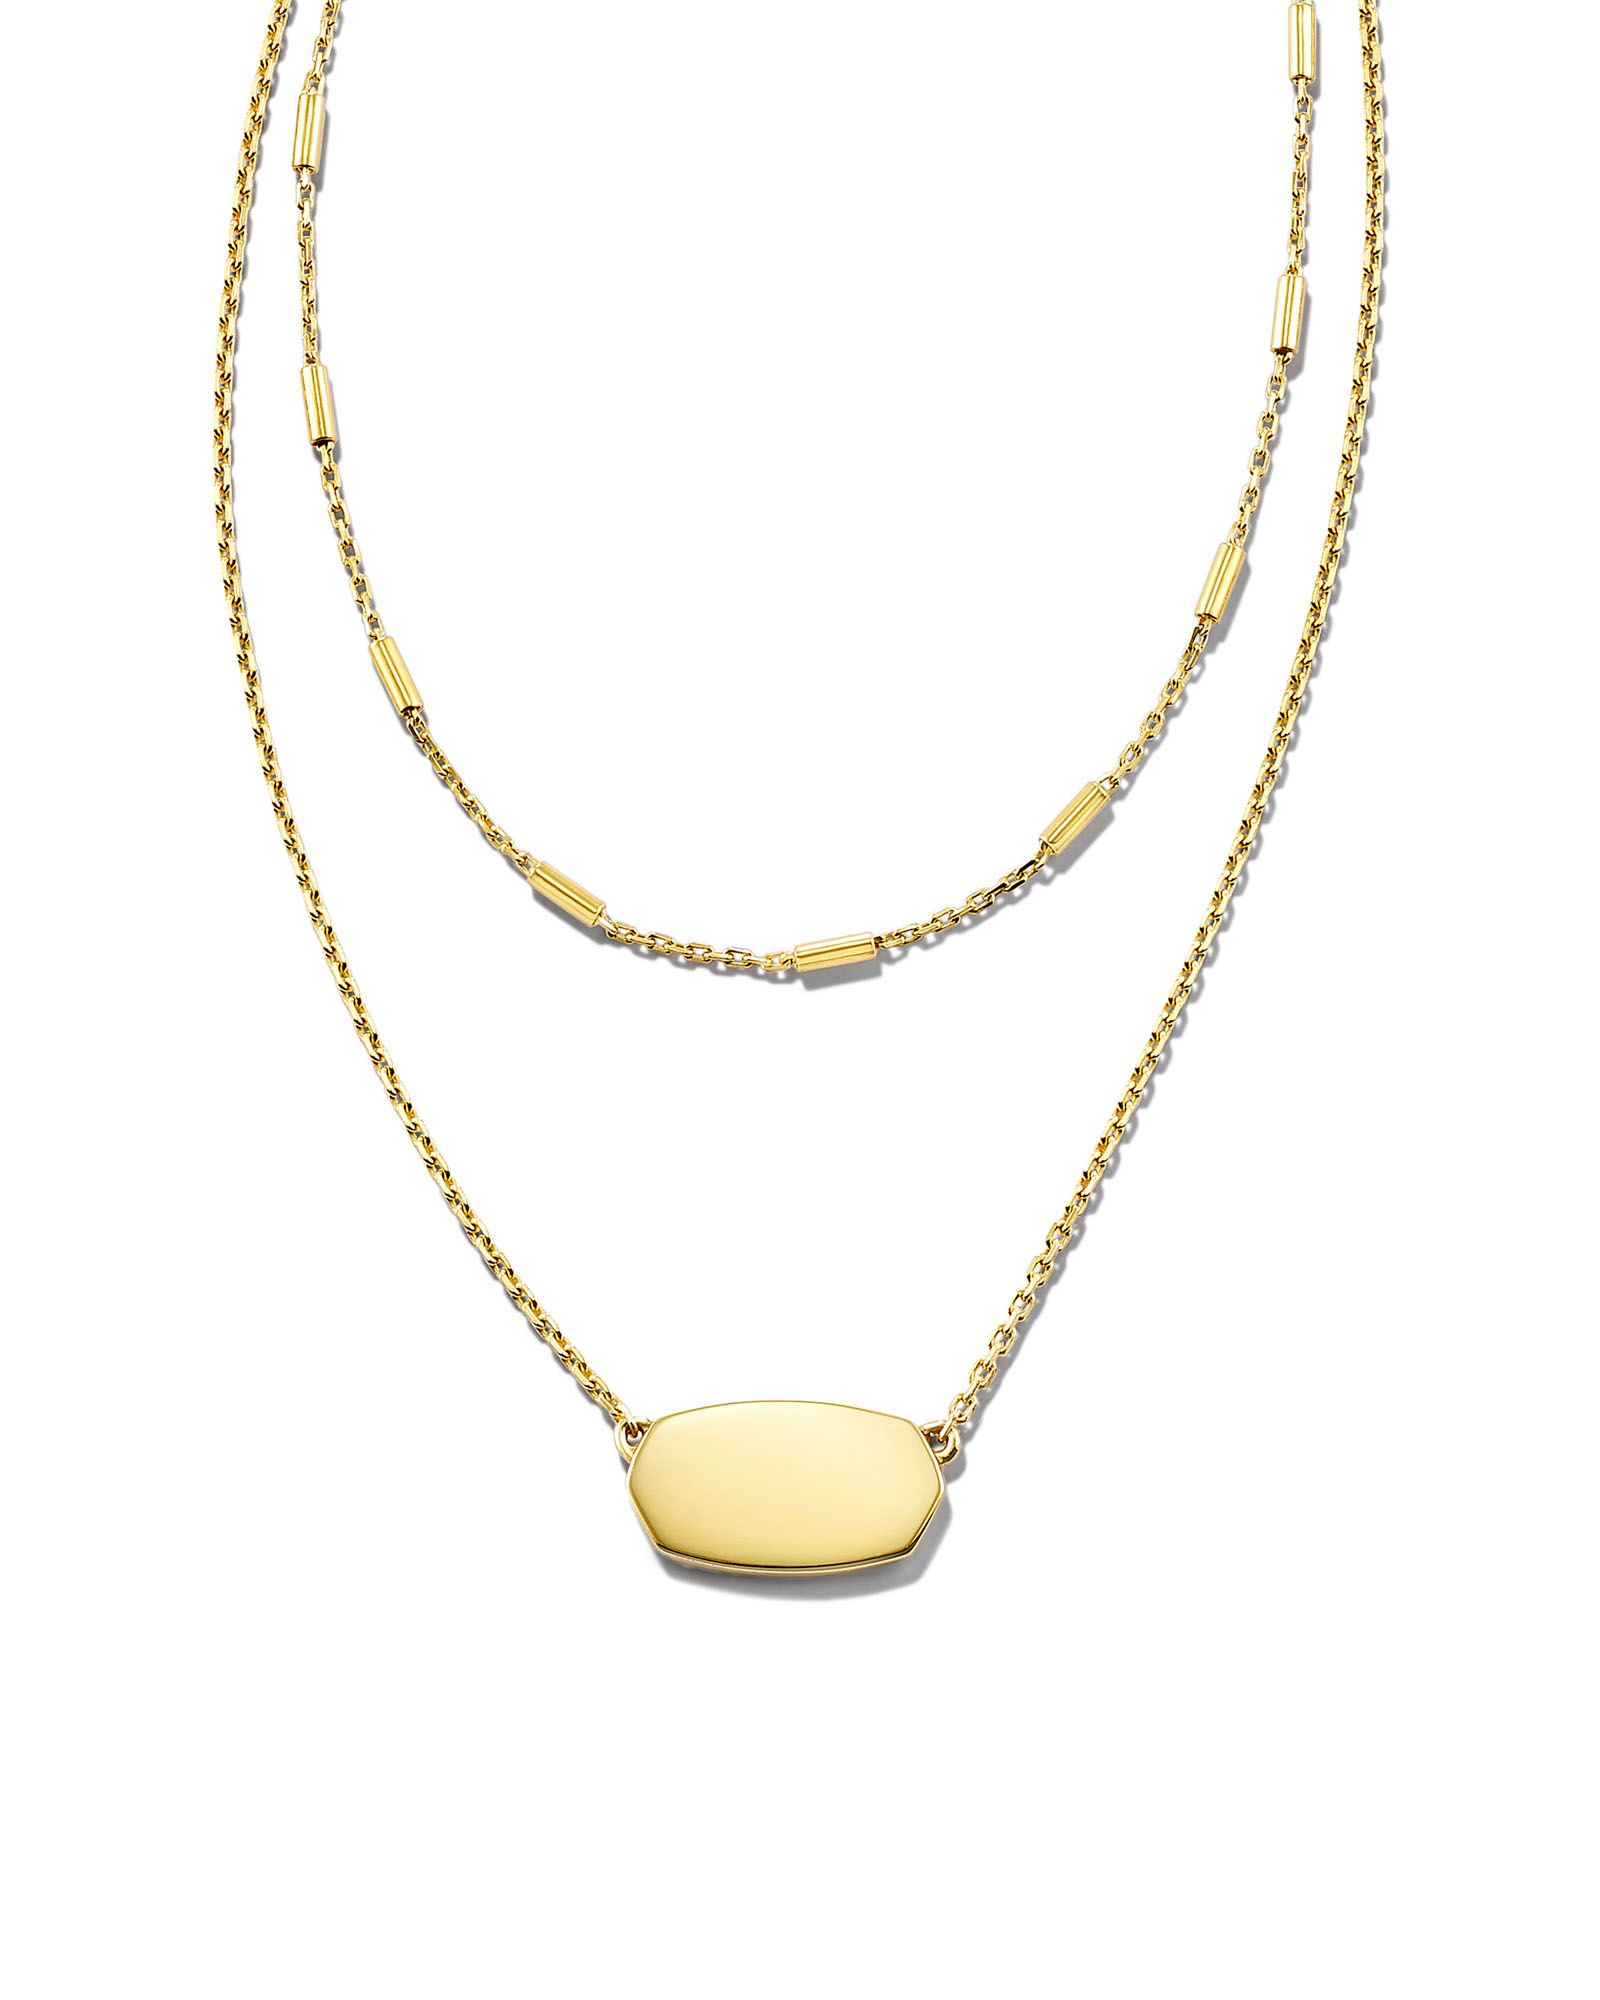 Elisa Multi Strand Necklace in 18k Yellow Gold Vermeil | Kendra Scott | Kendra Scott